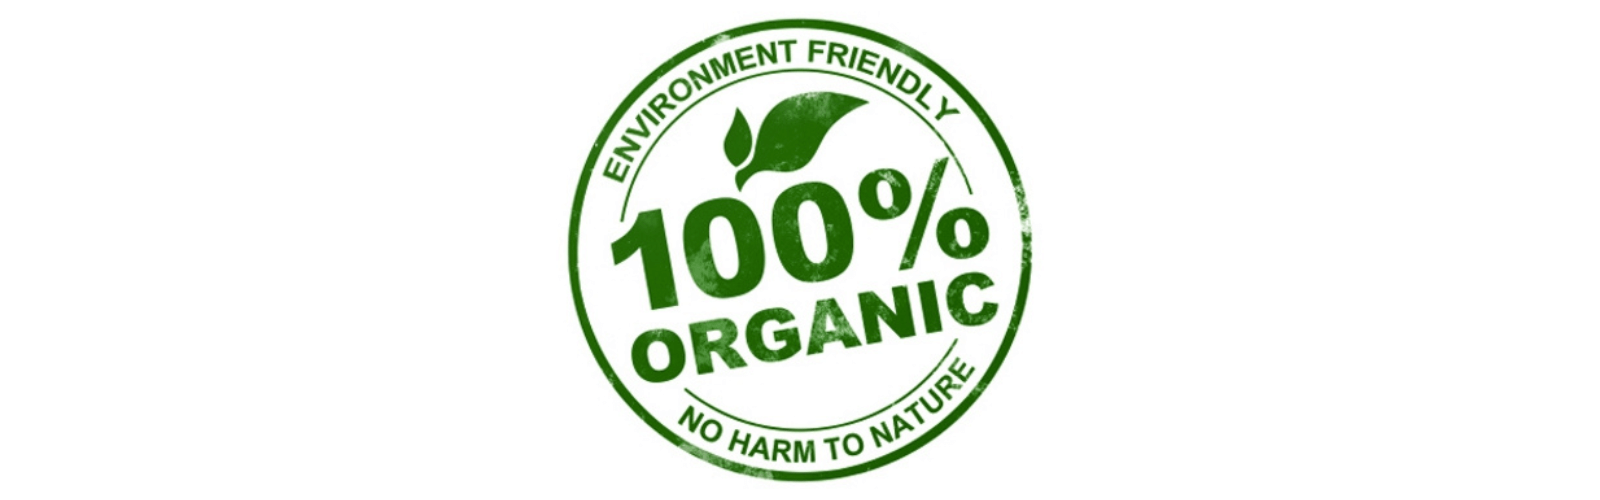 Chemical vs. Organic Fertilizers For Marijuana